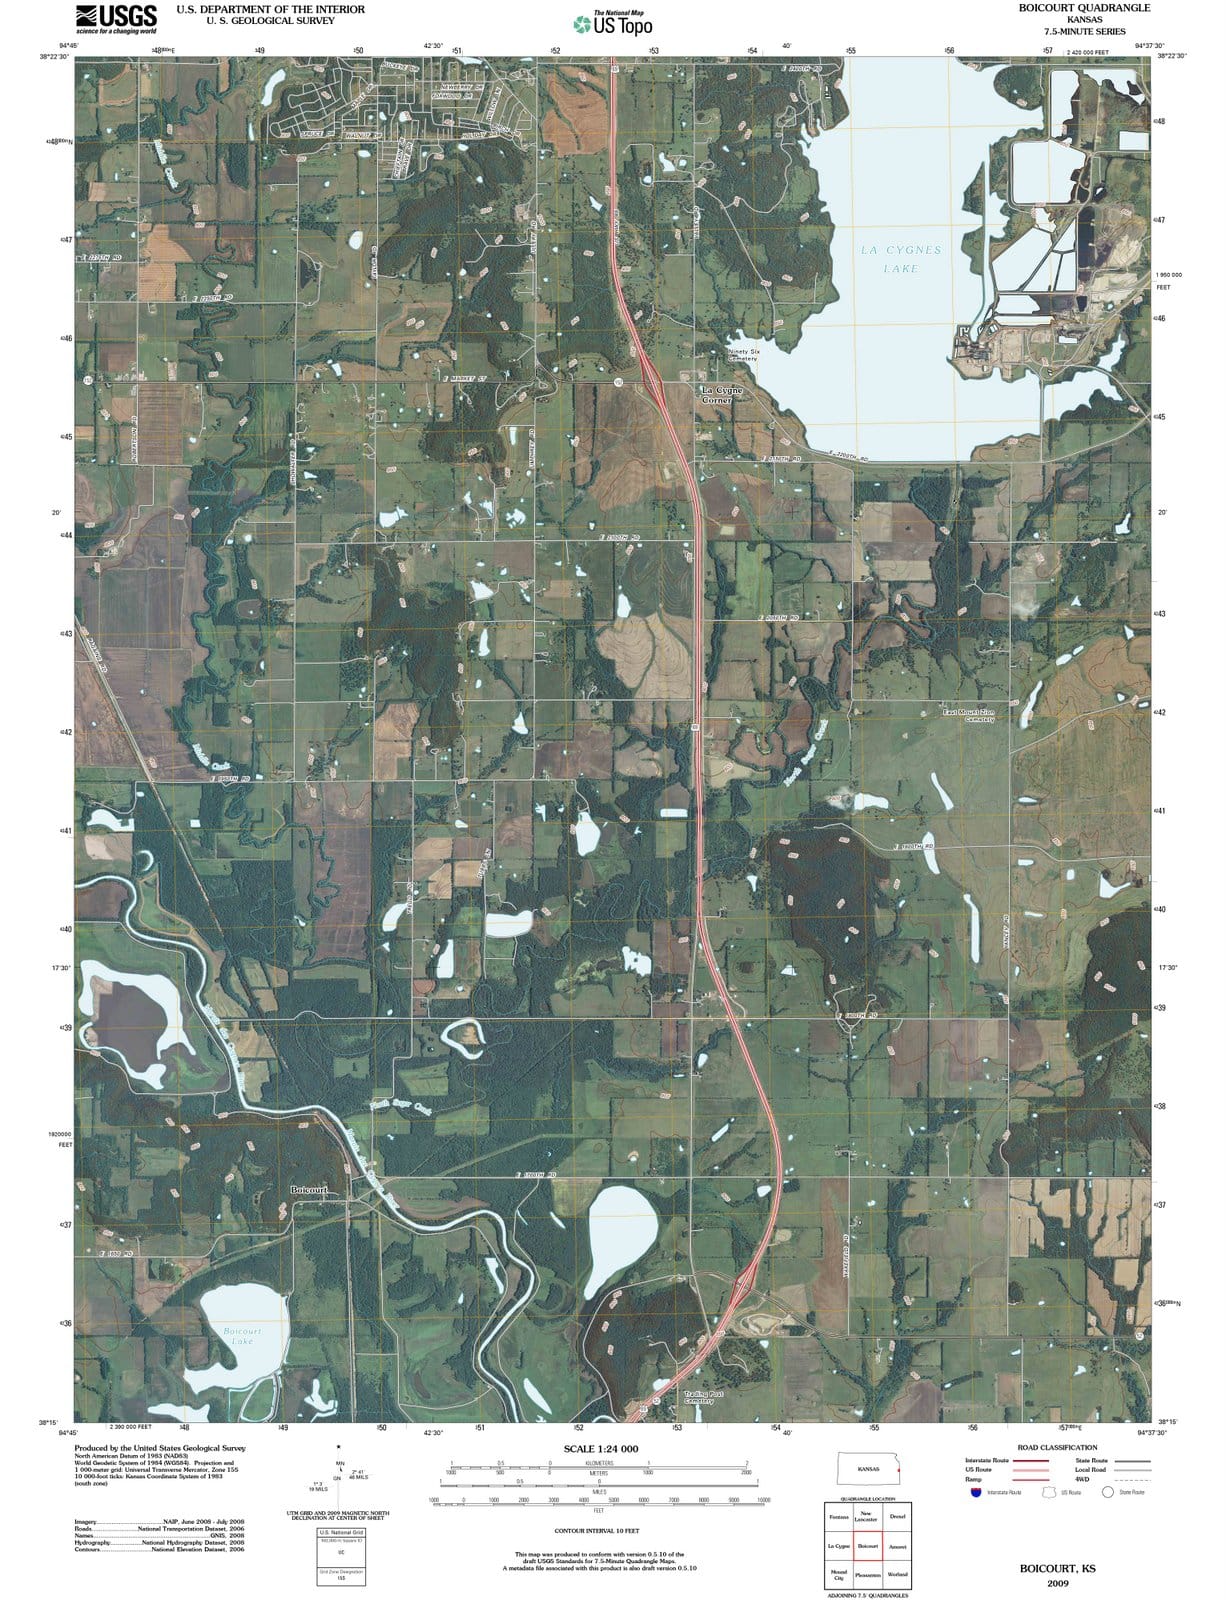 2009 Boicourt, KS - Kansas - USGS Topographic Map